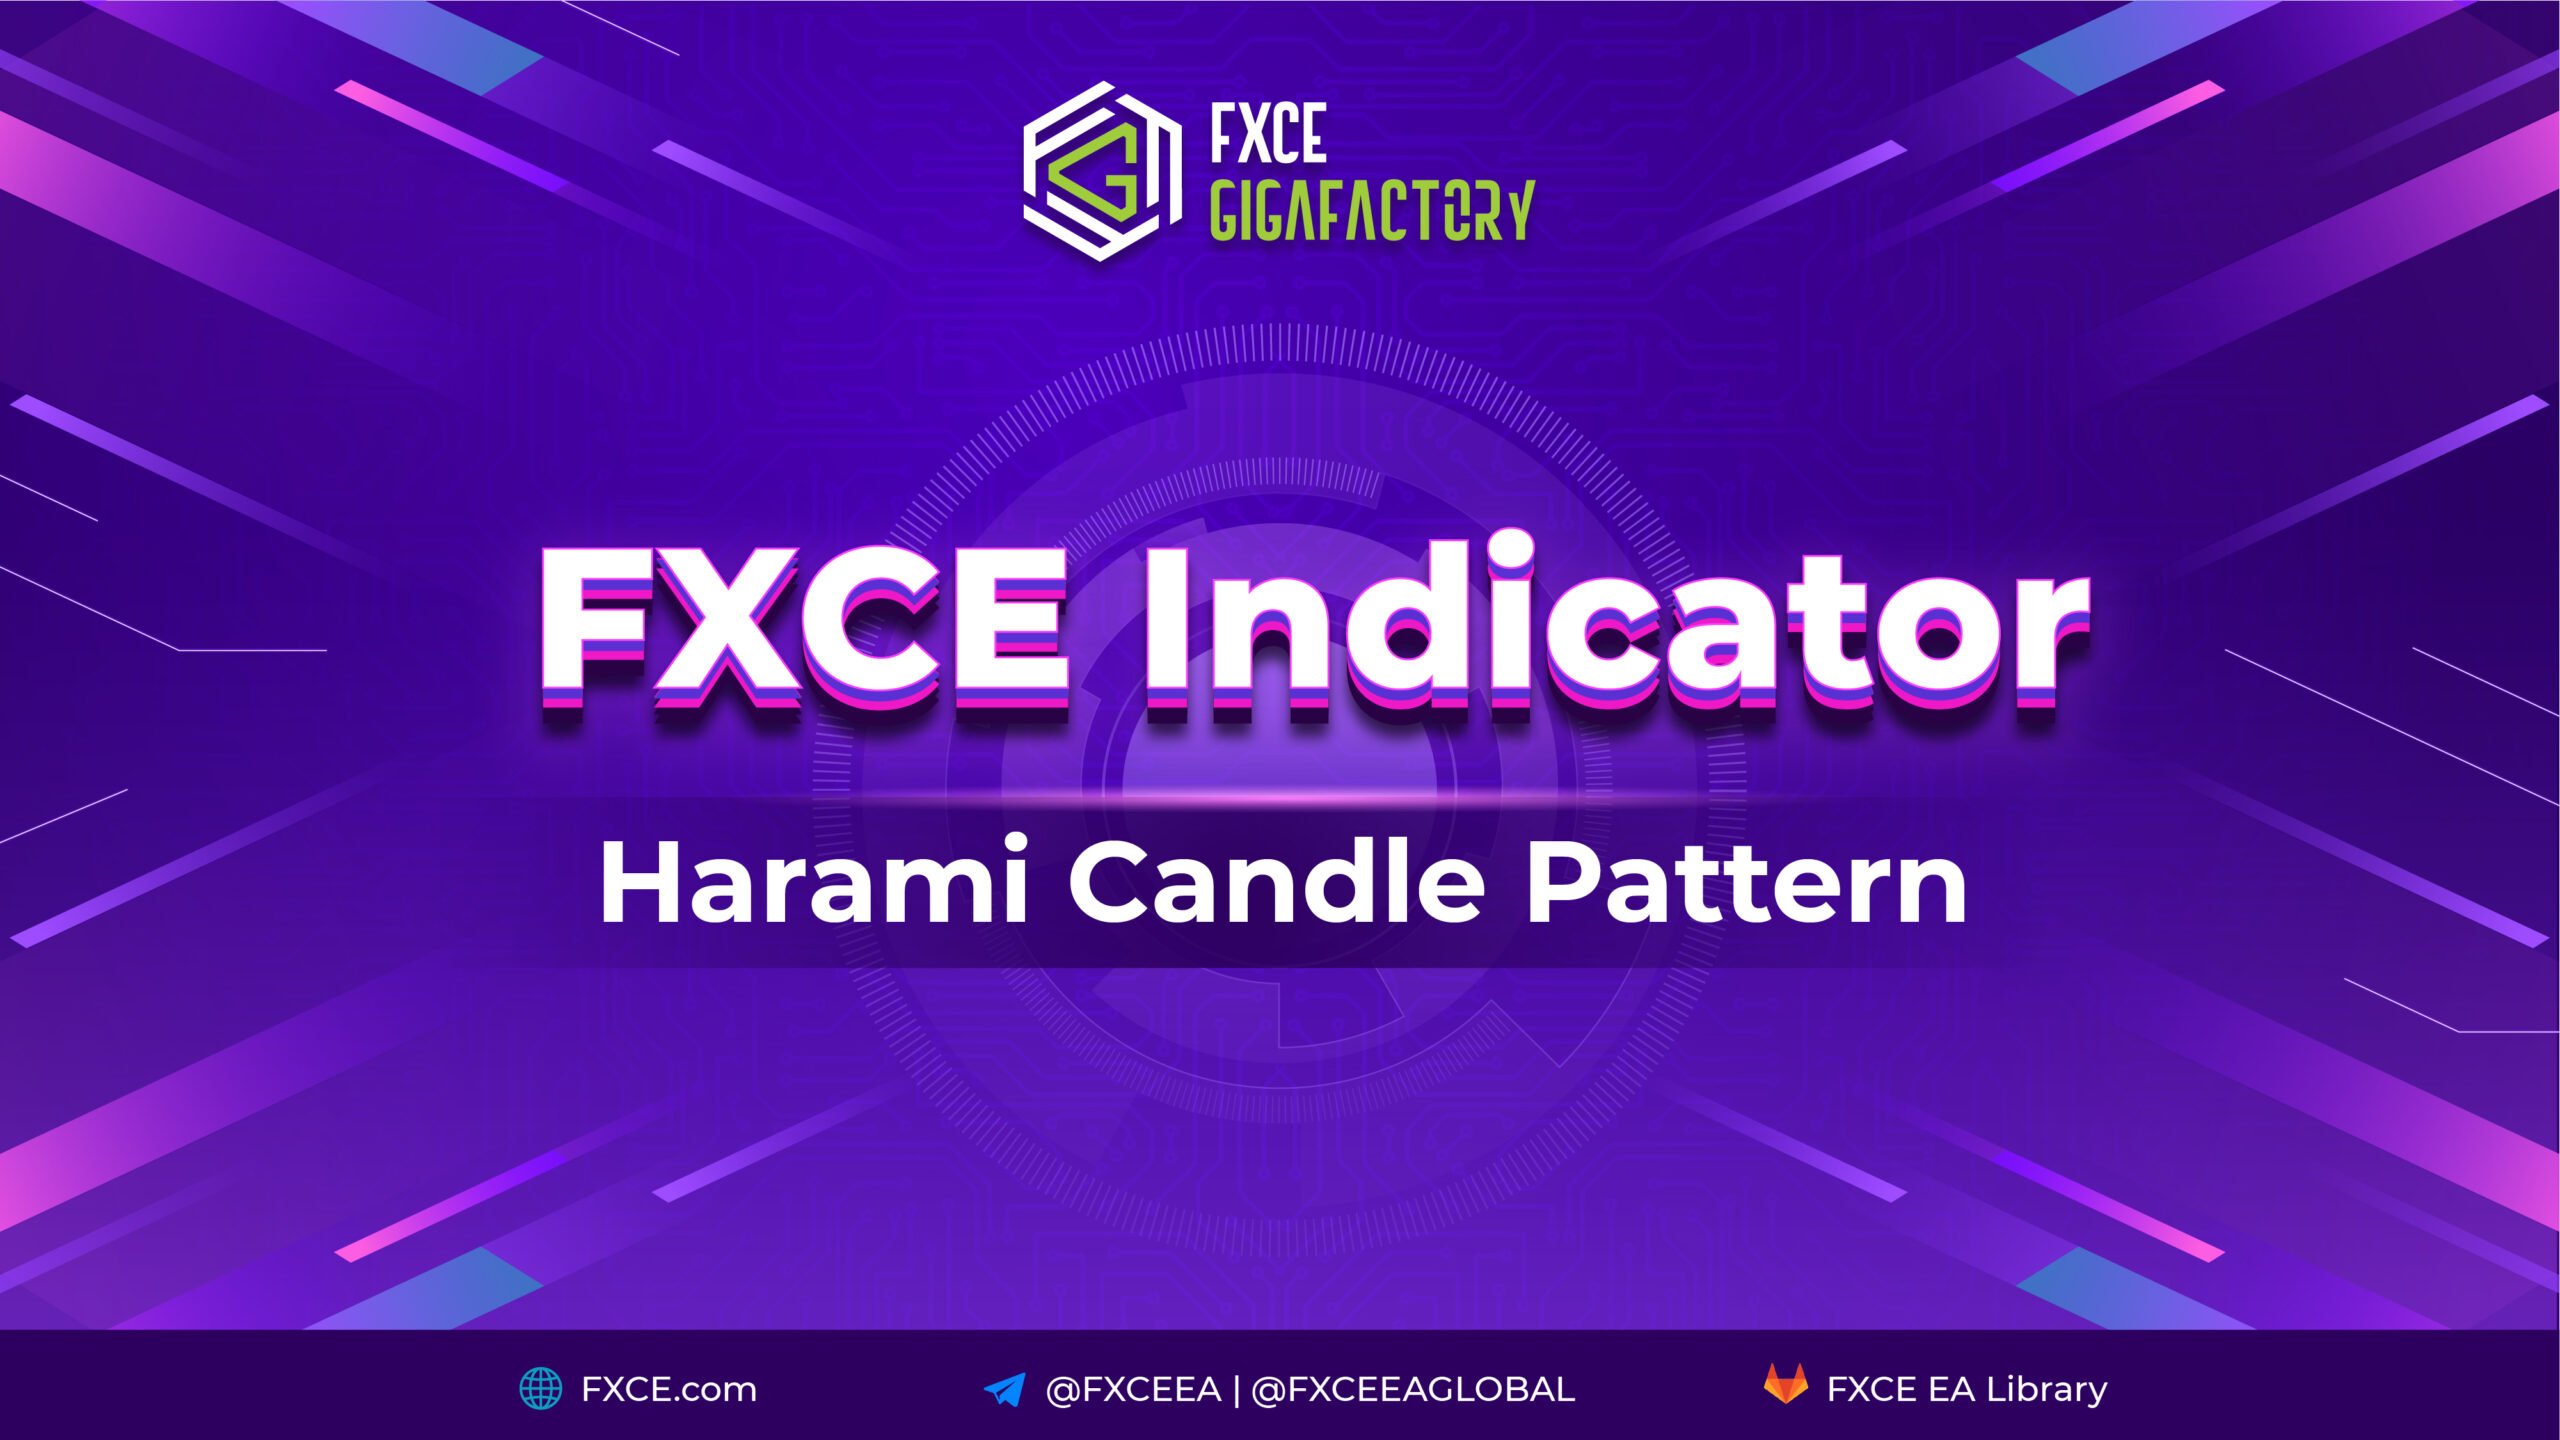 FXCE Indicator Harami Candle Pattern